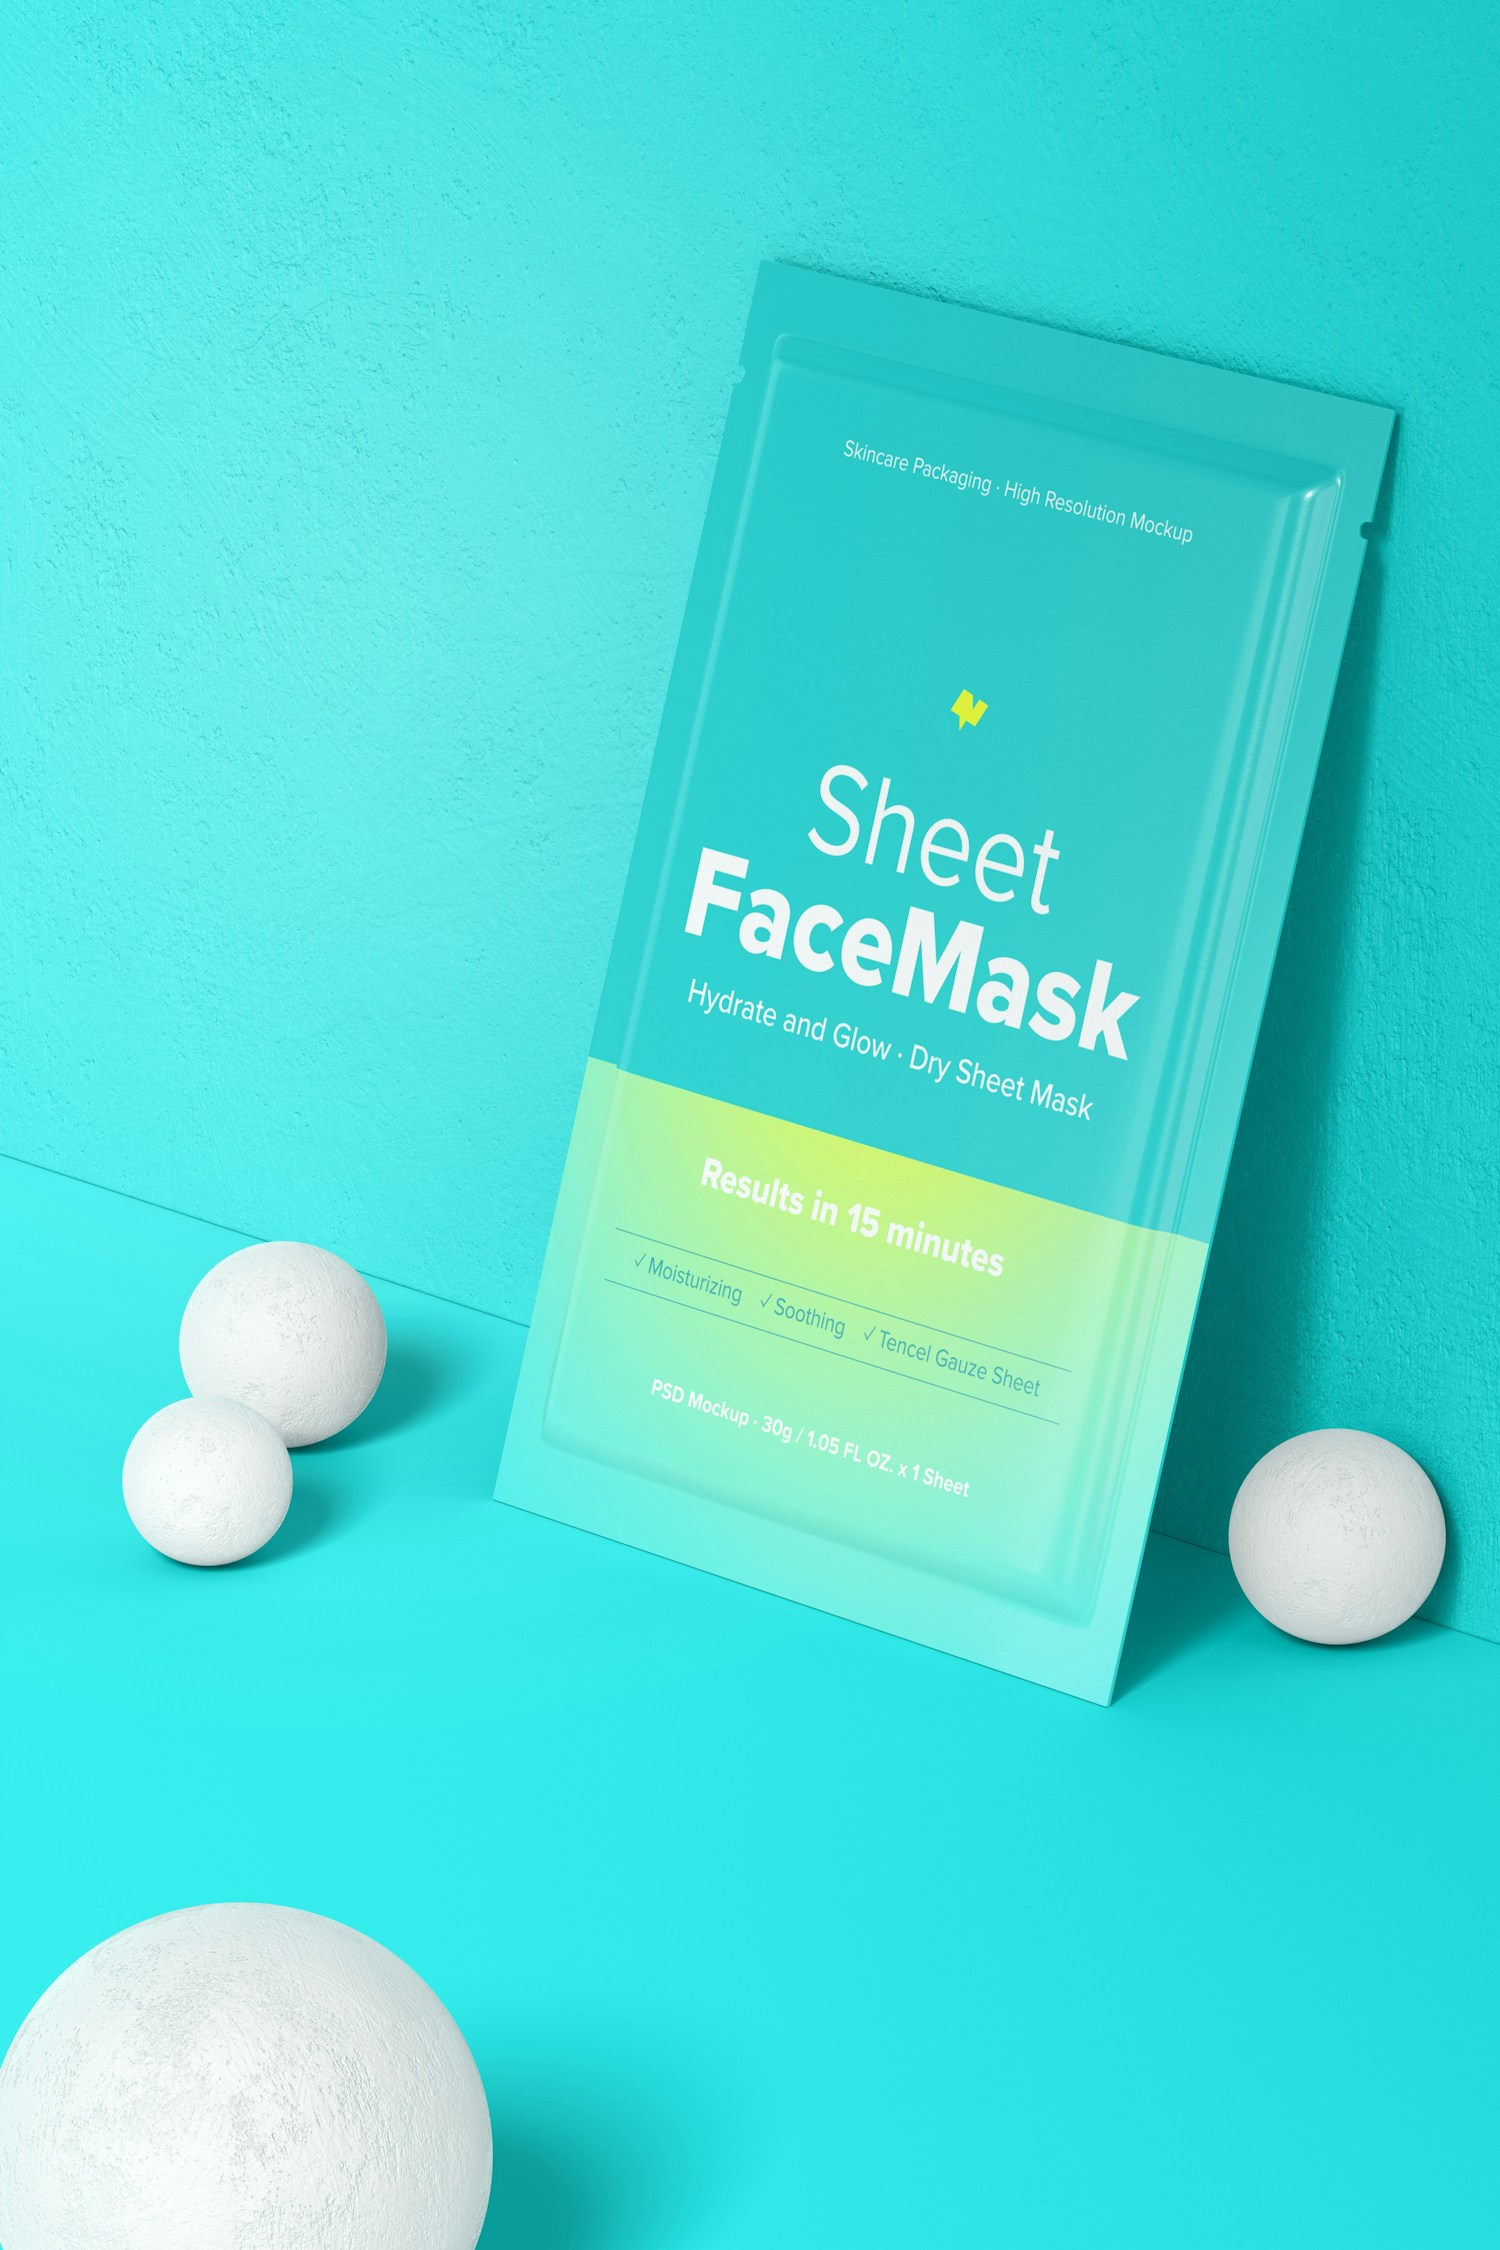 Sheet Face Mask Scene Mockup